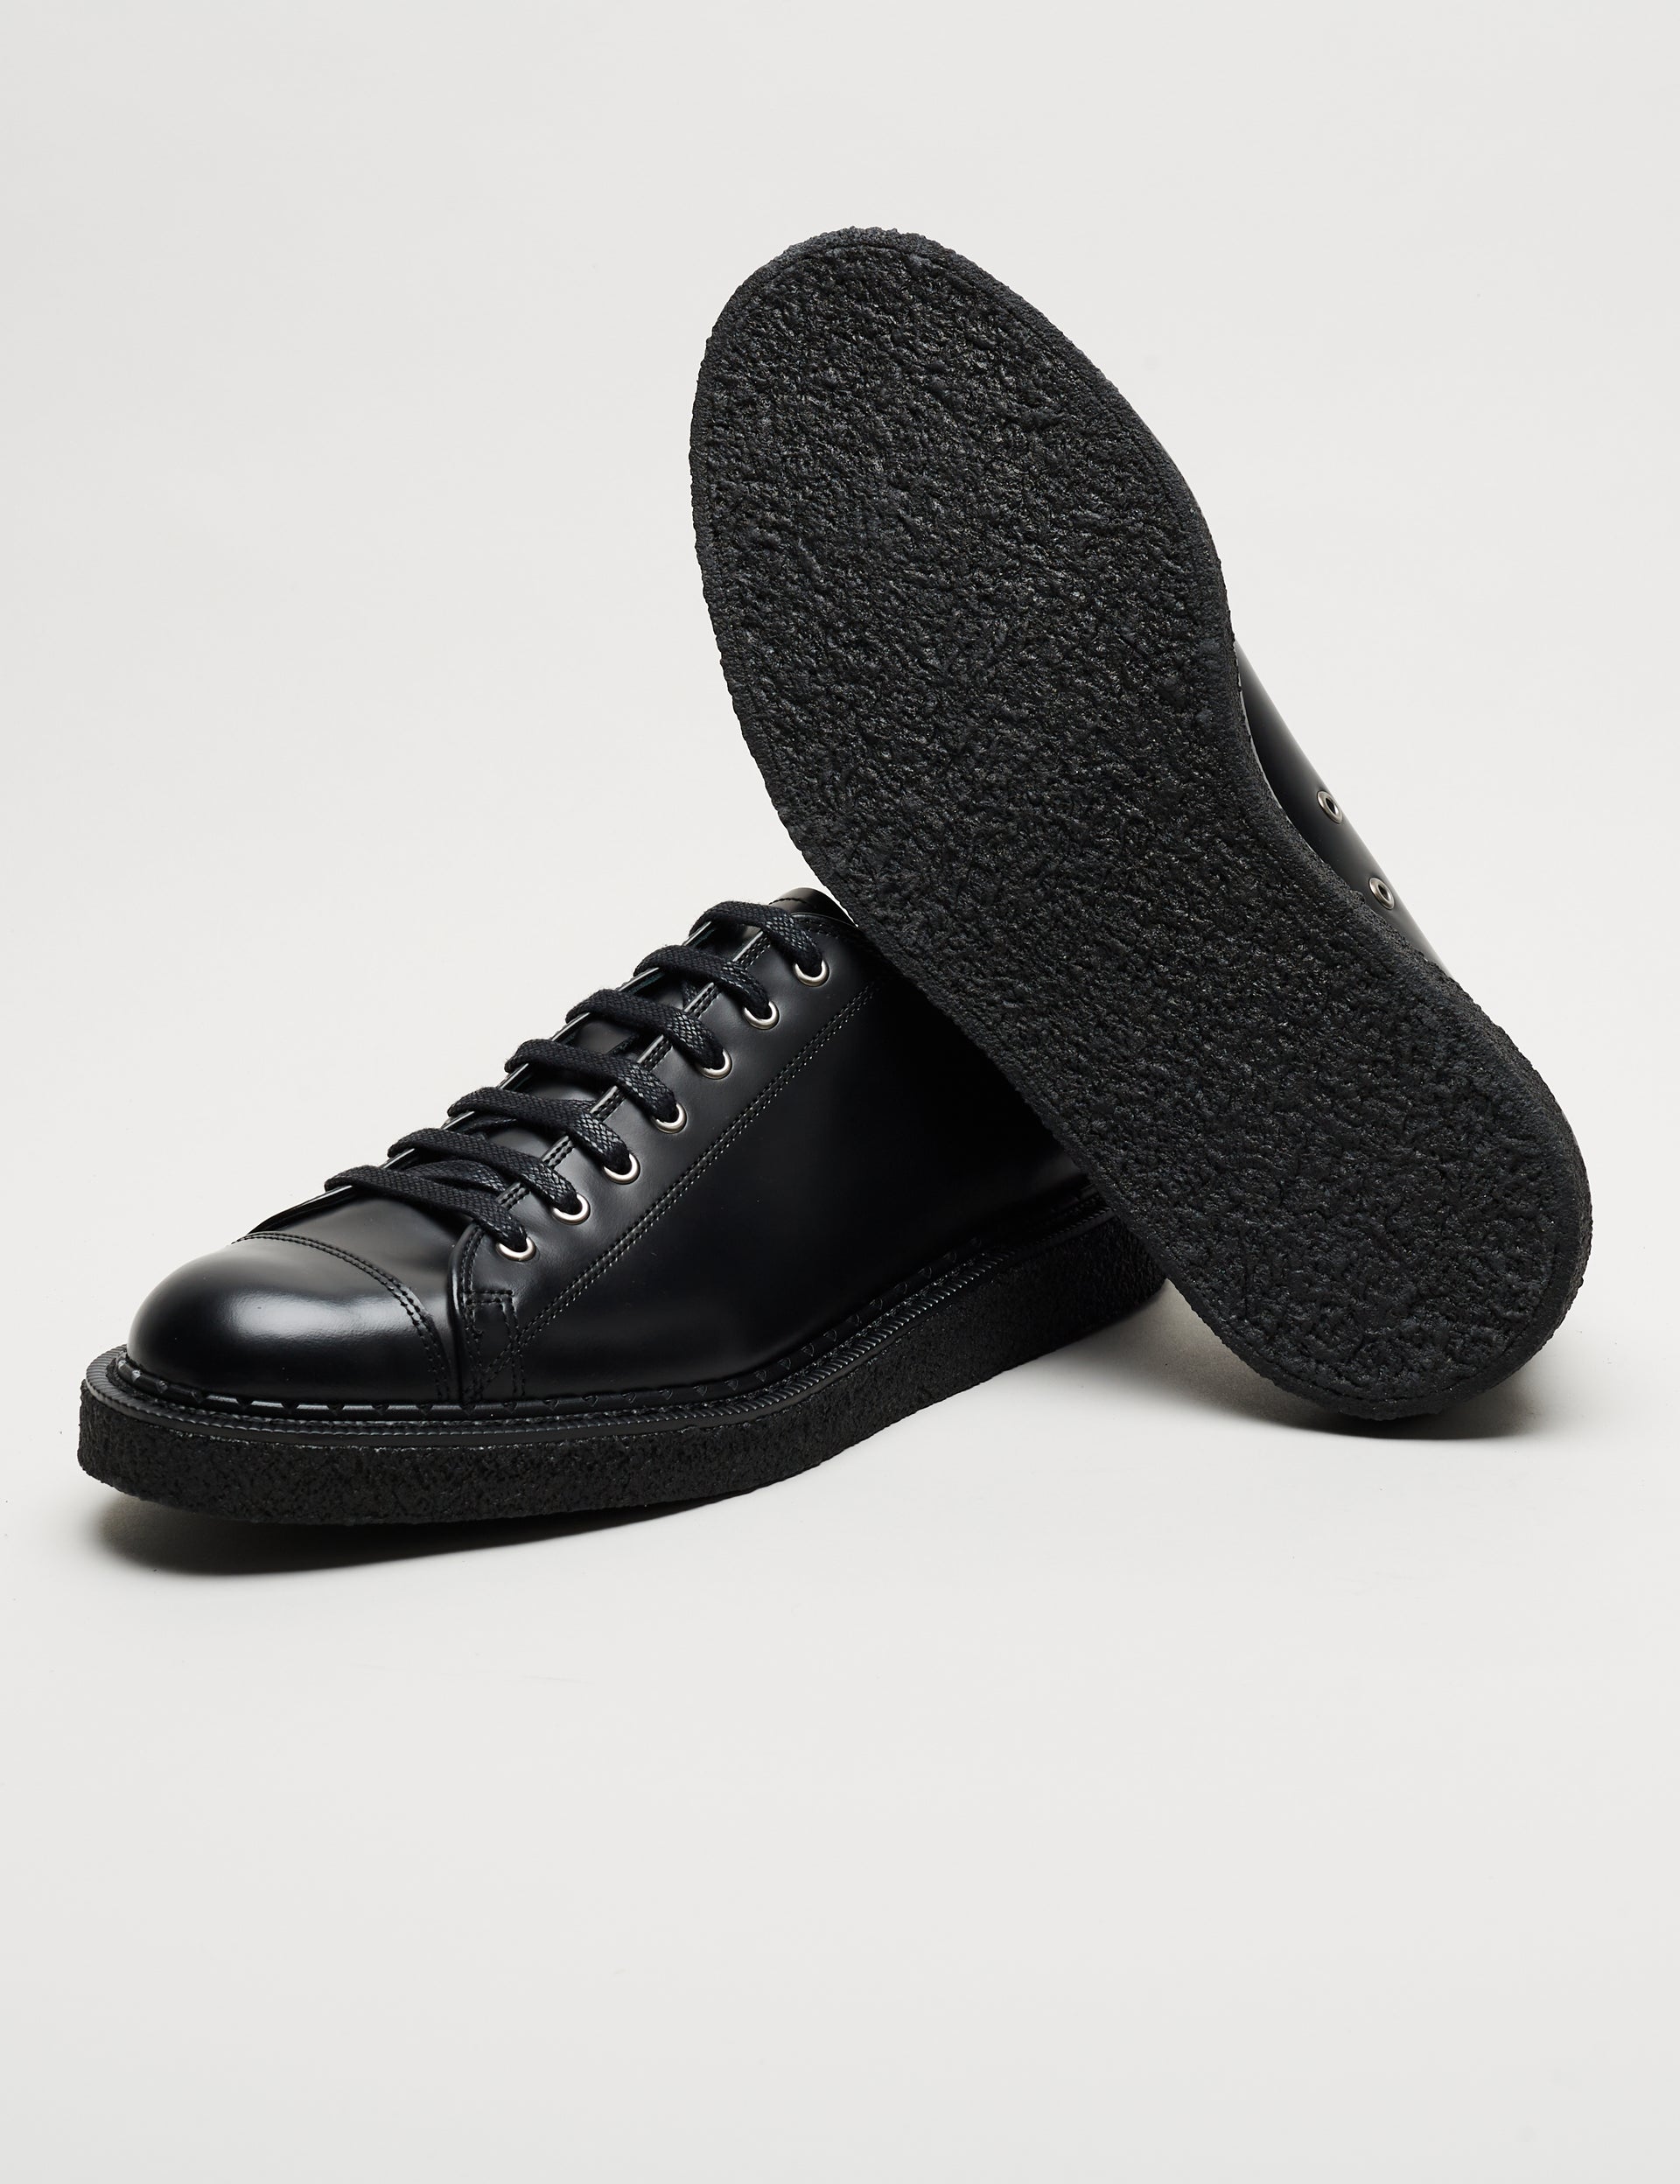 Monkey Shoe Black